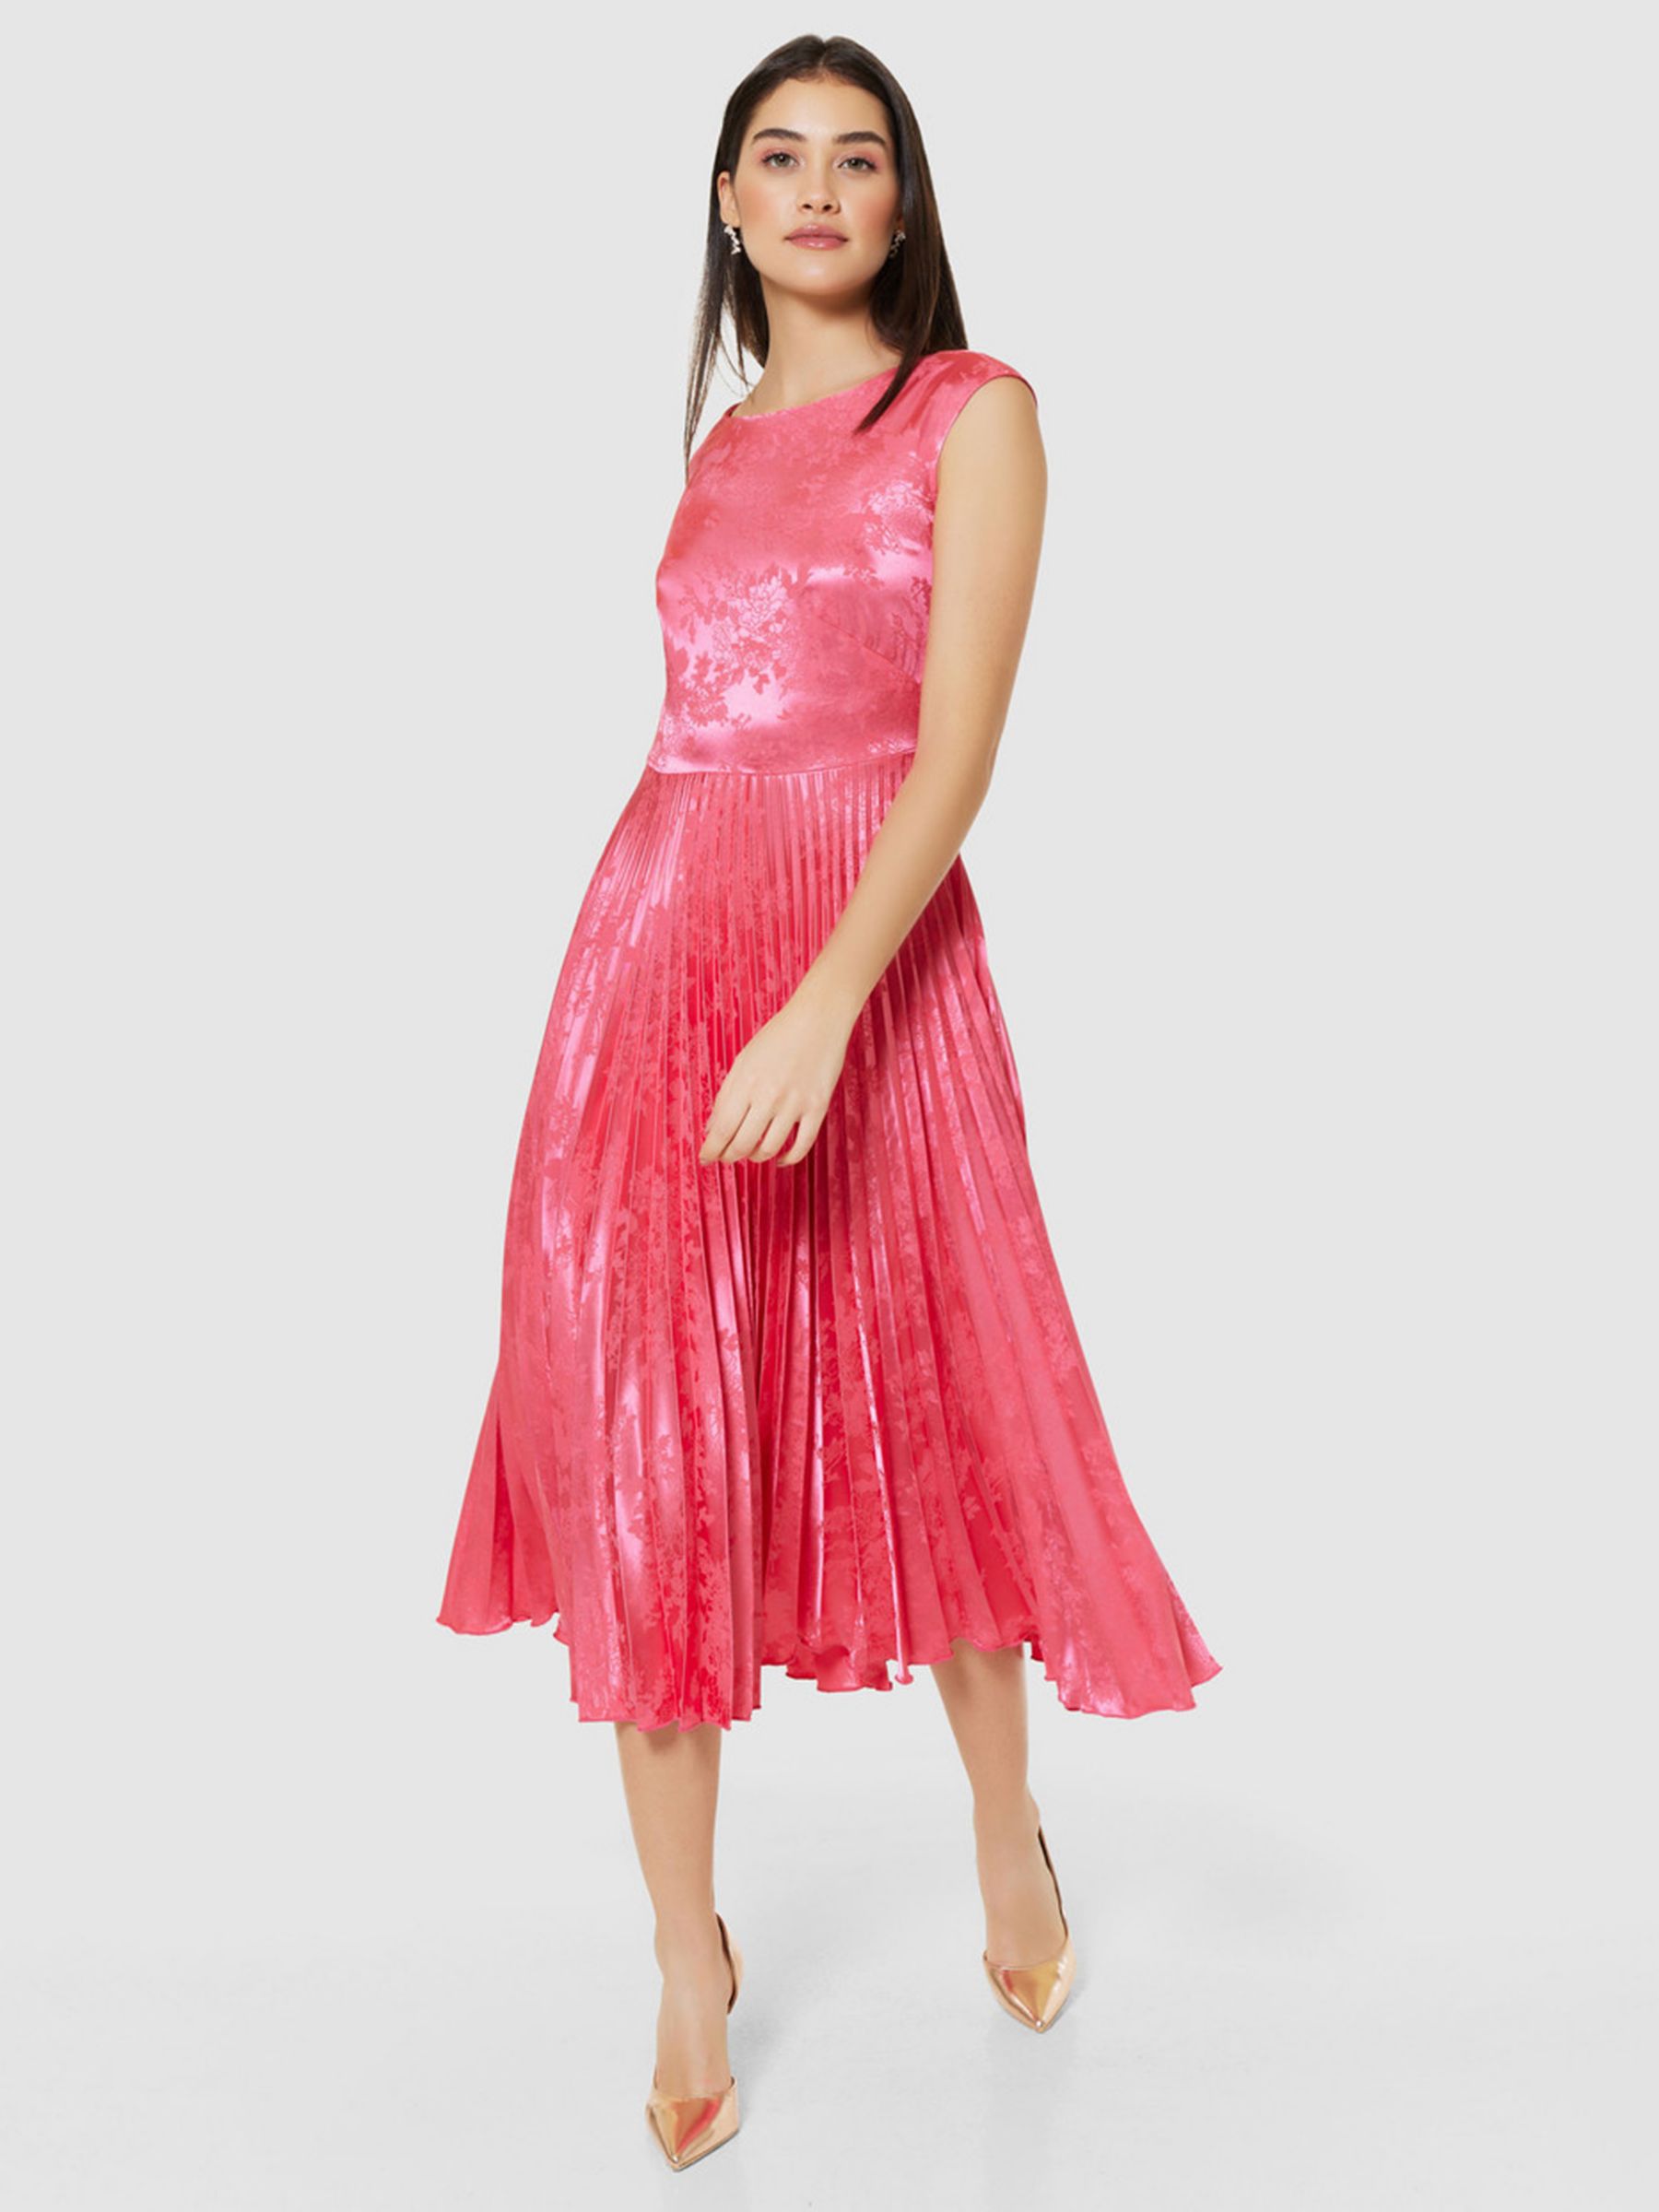 Closet London Pleated Metallic Midi Dress, Pink, 10